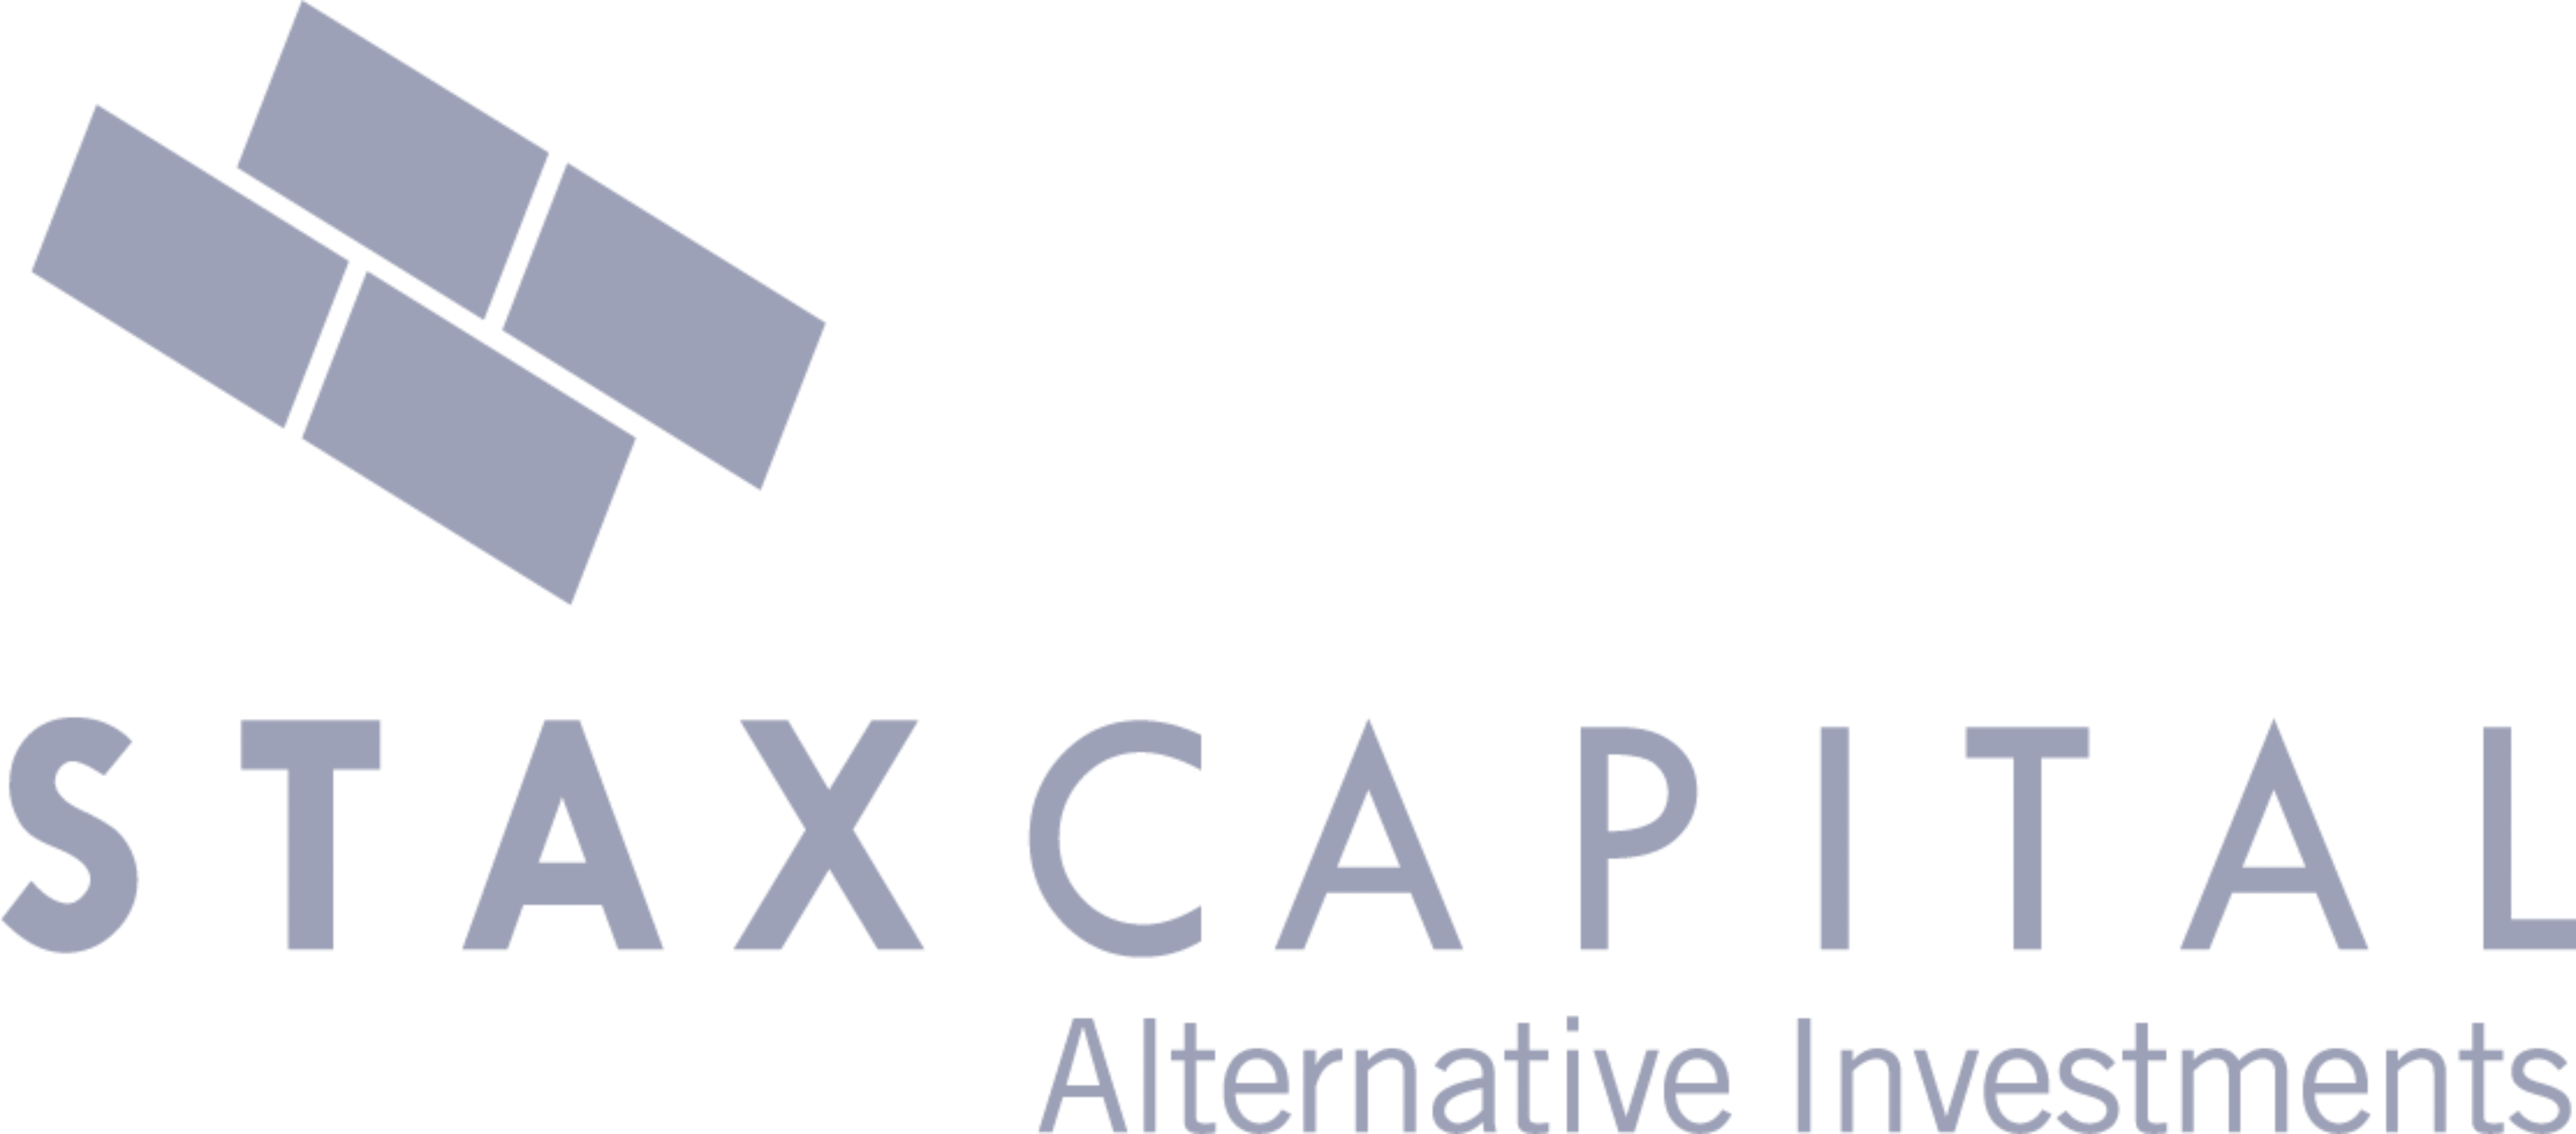 stax capital logo